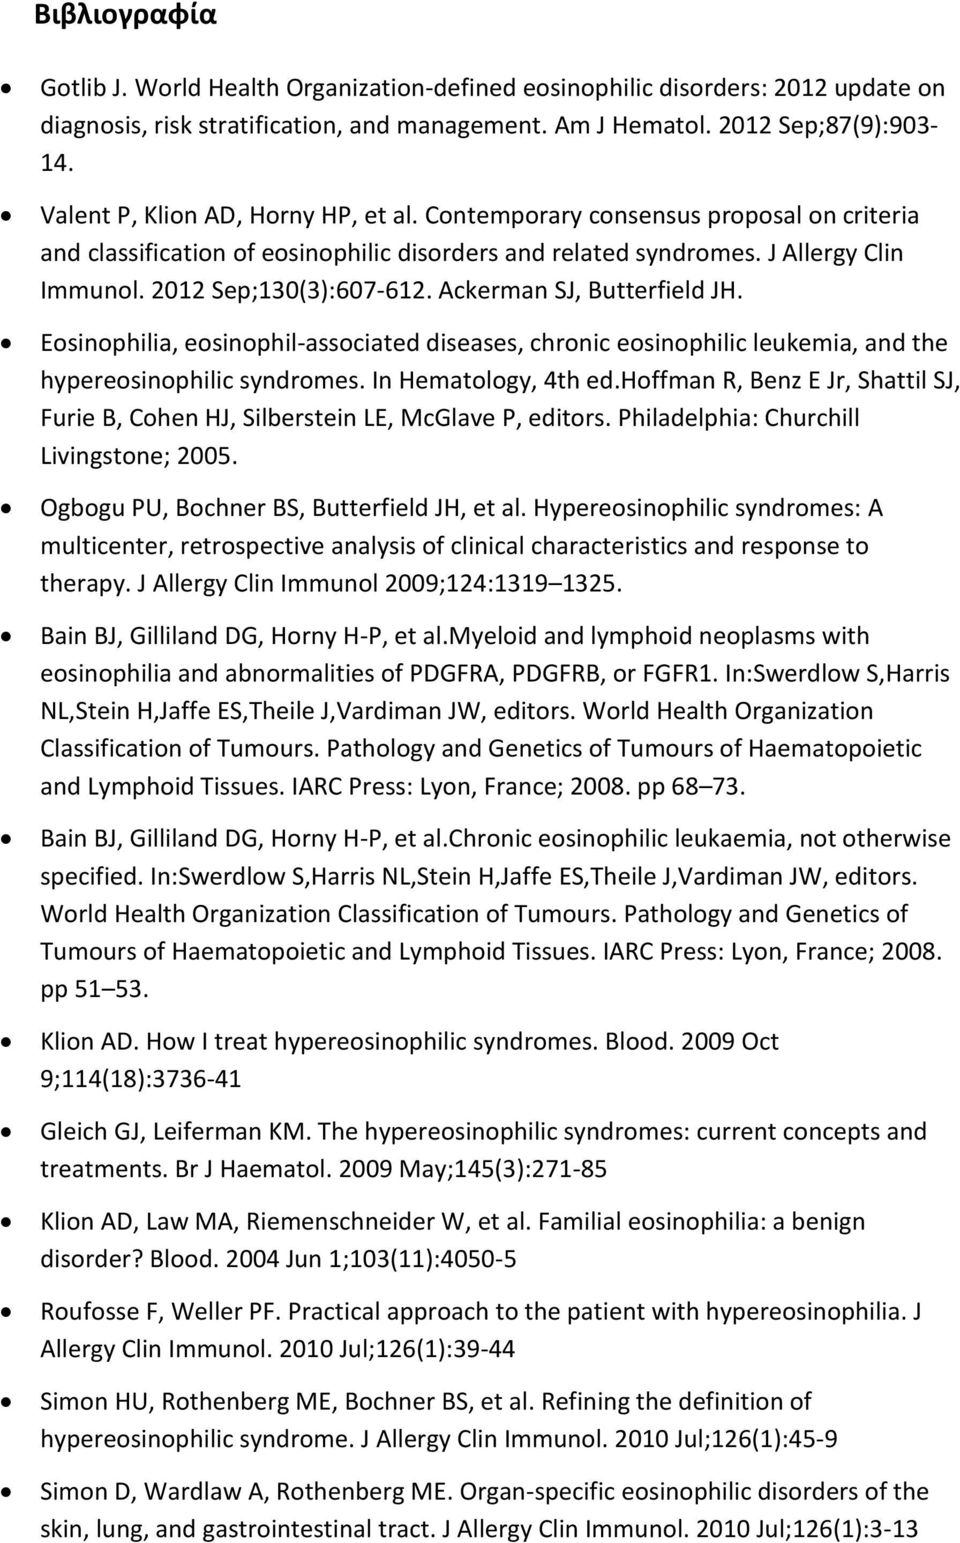 Ackerman SJ, Butterfield JH. Eosinophilia, eosinophil-associated diseases, chronic eosinophilic leukemia, and the hypereosinophilic syndromes. In Hematology, 4th ed.